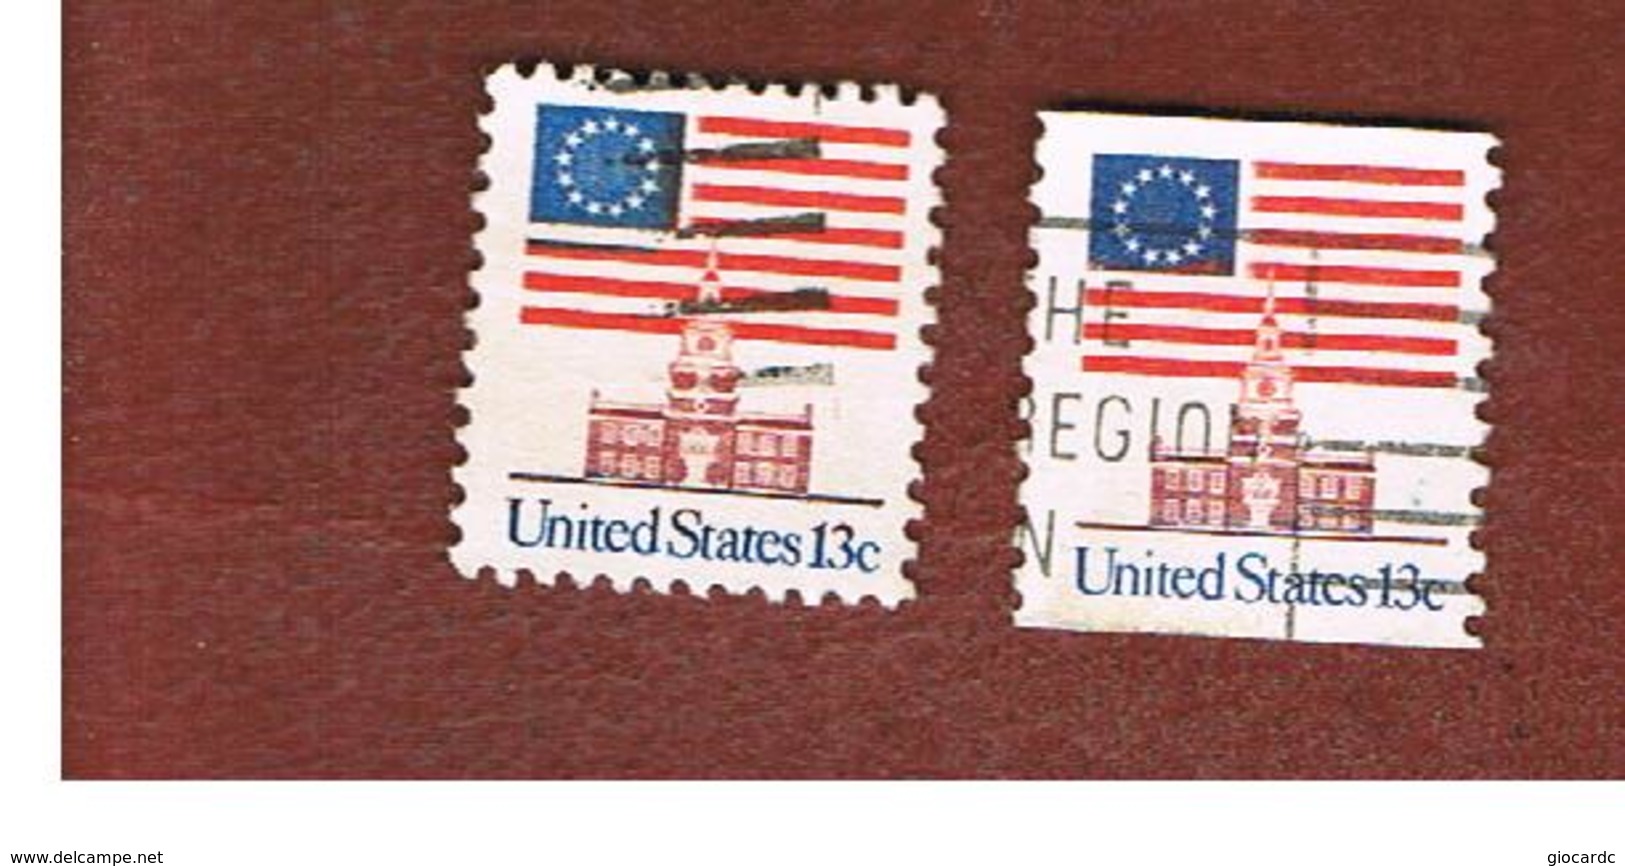 STATI UNITI (U.S.A.) - SG 1606  - 1975  AMERICAN SERIE:  13 STARS FLAG (2 DIFFERENT PERFORATIONS)  - USED - Usati